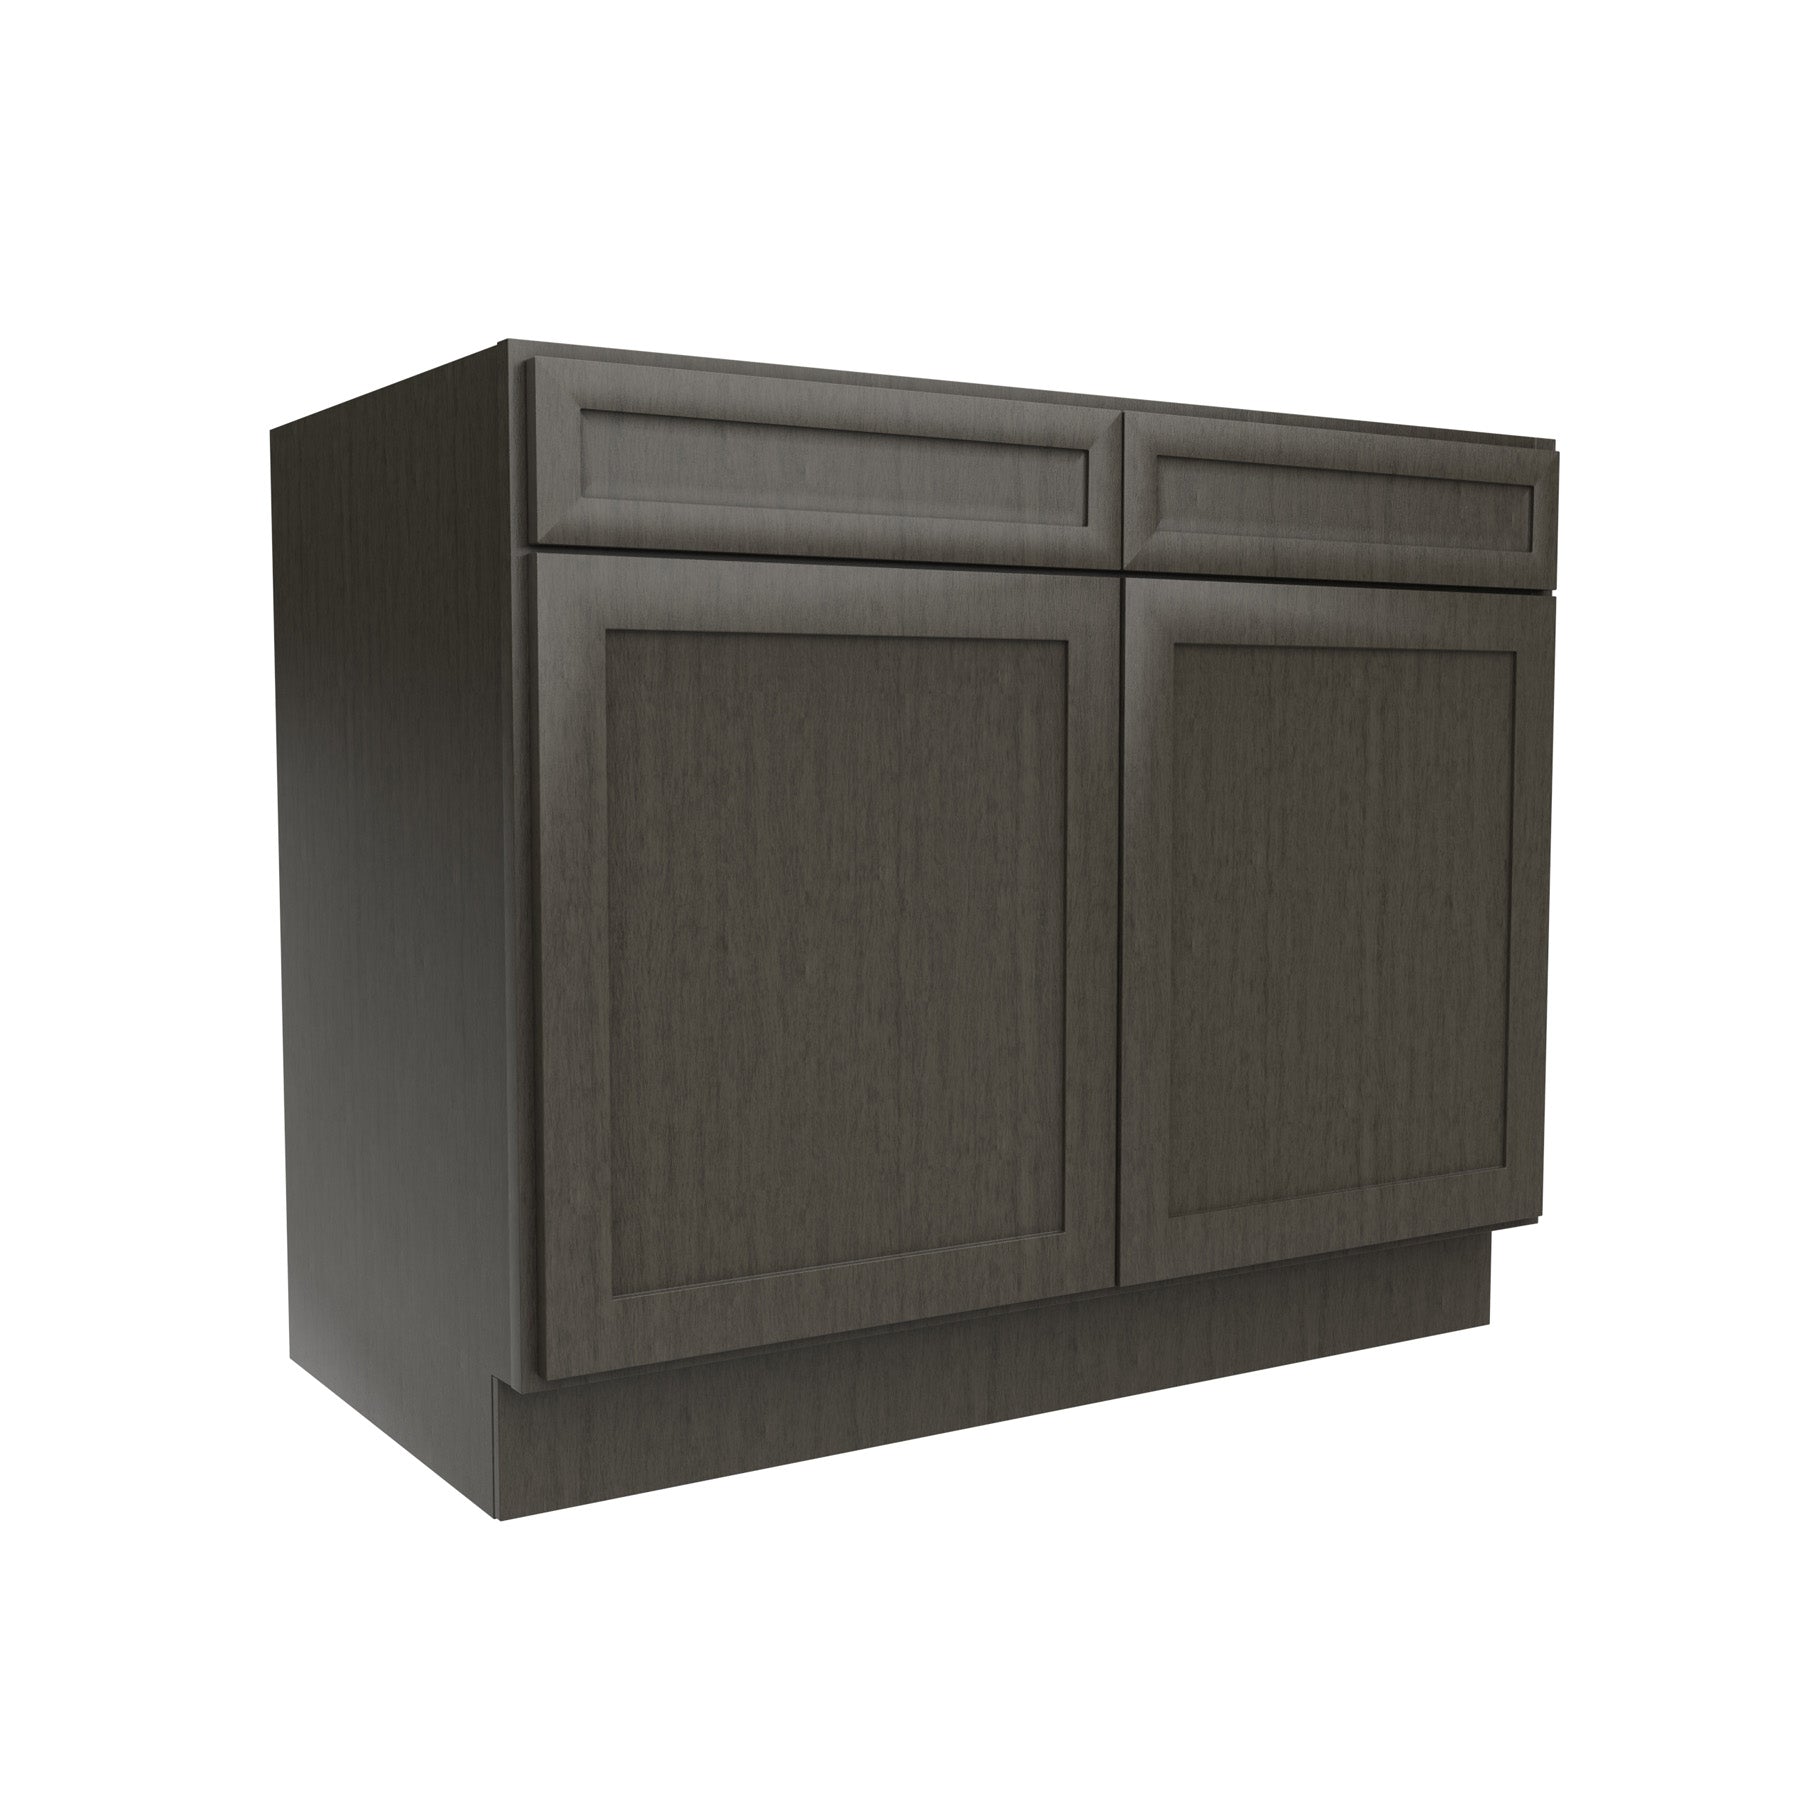 RTA - Elegant Smoky Grey - Double Drawer Front 2 Door Sink Base Cabinet | 42"W x 34.5"H x 24"D